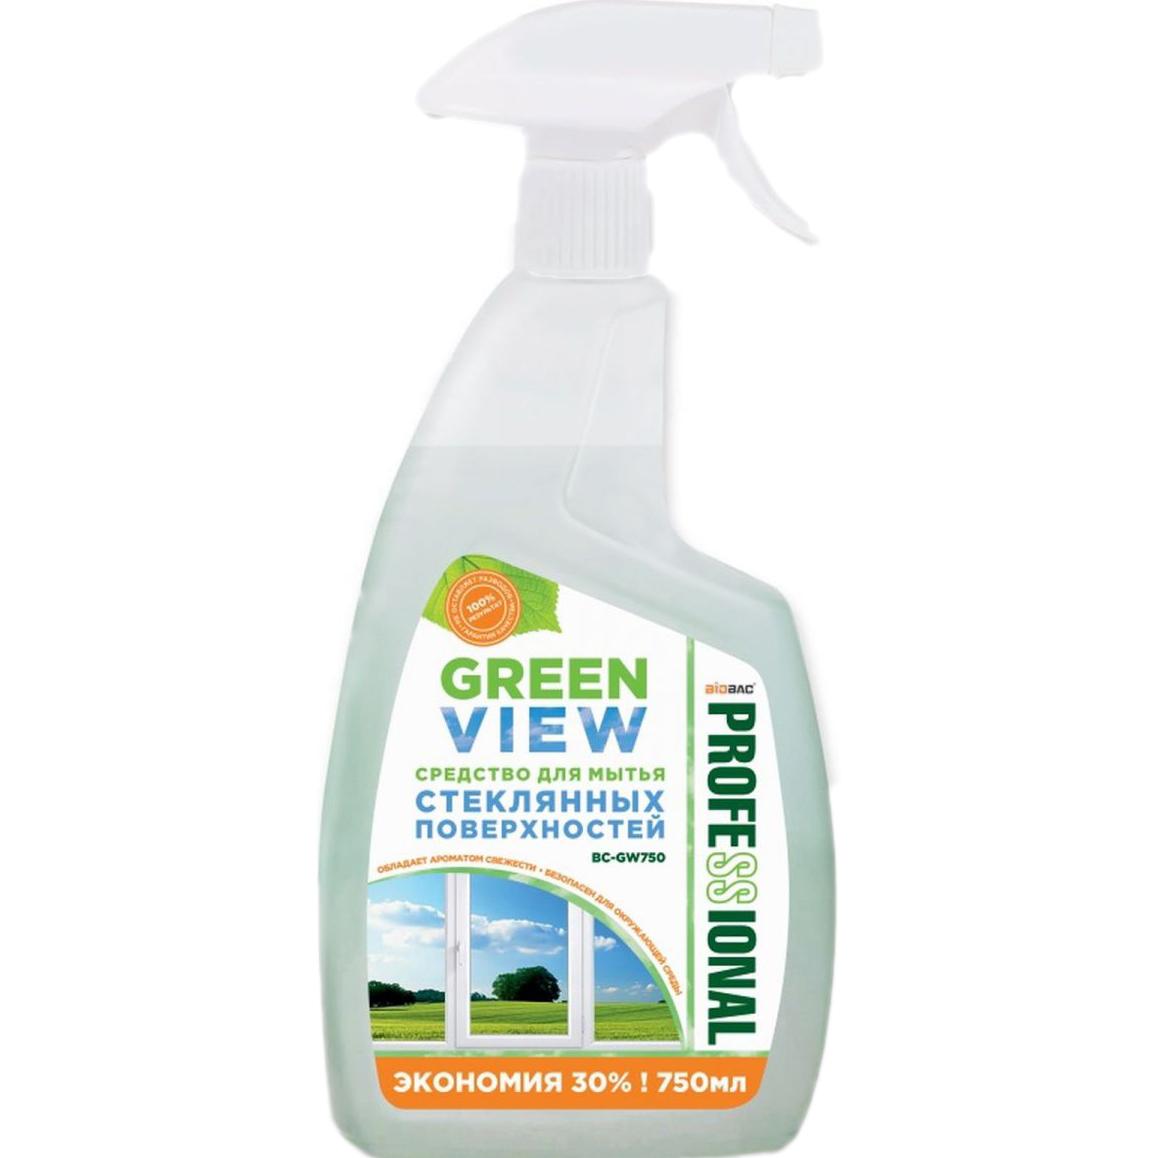 Средство Biobac Green View для мытья стеклянных поверхностей, 750 мл